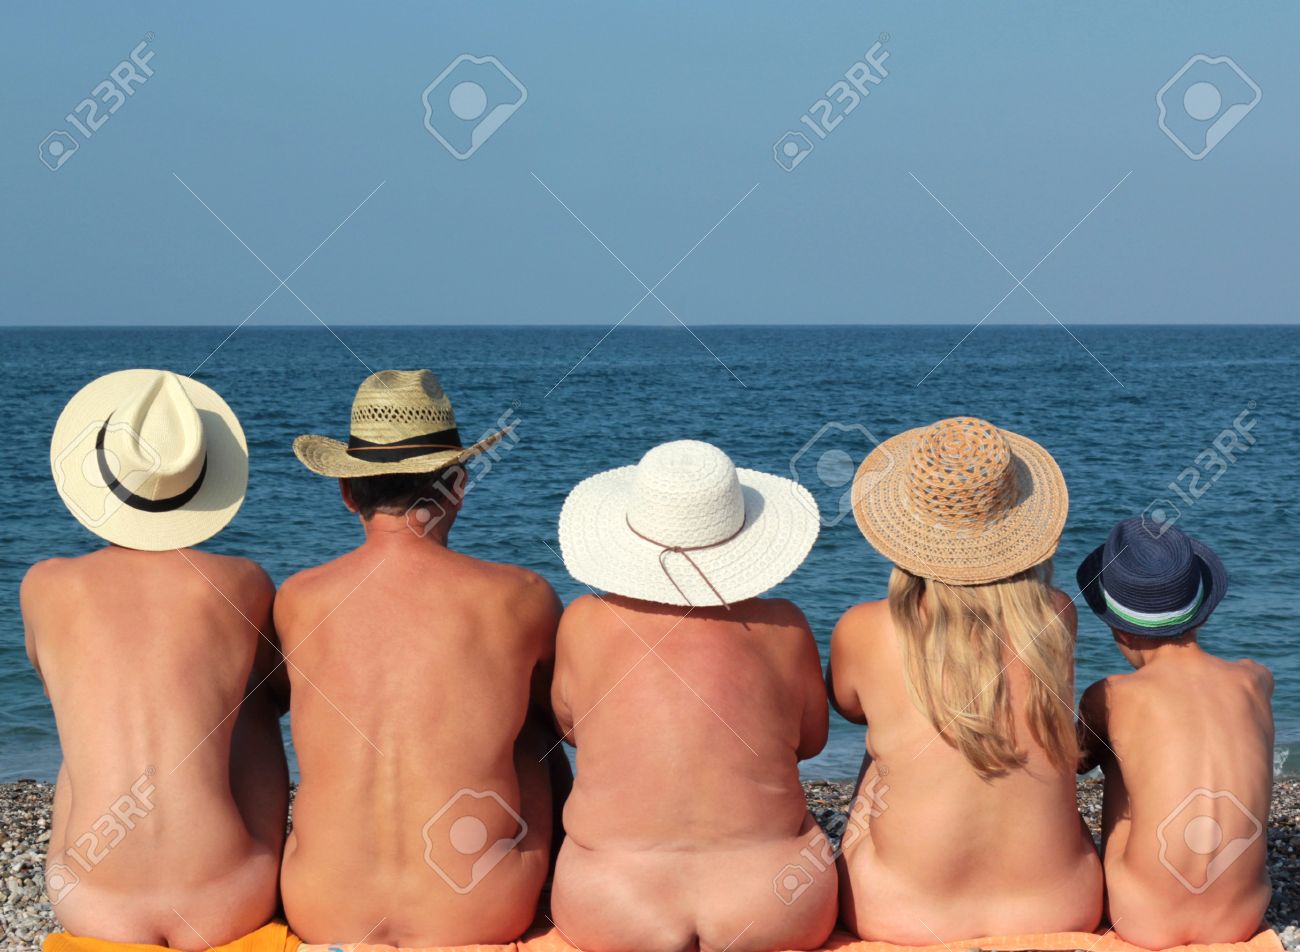 brian gregersen share nudist family beach fun photos